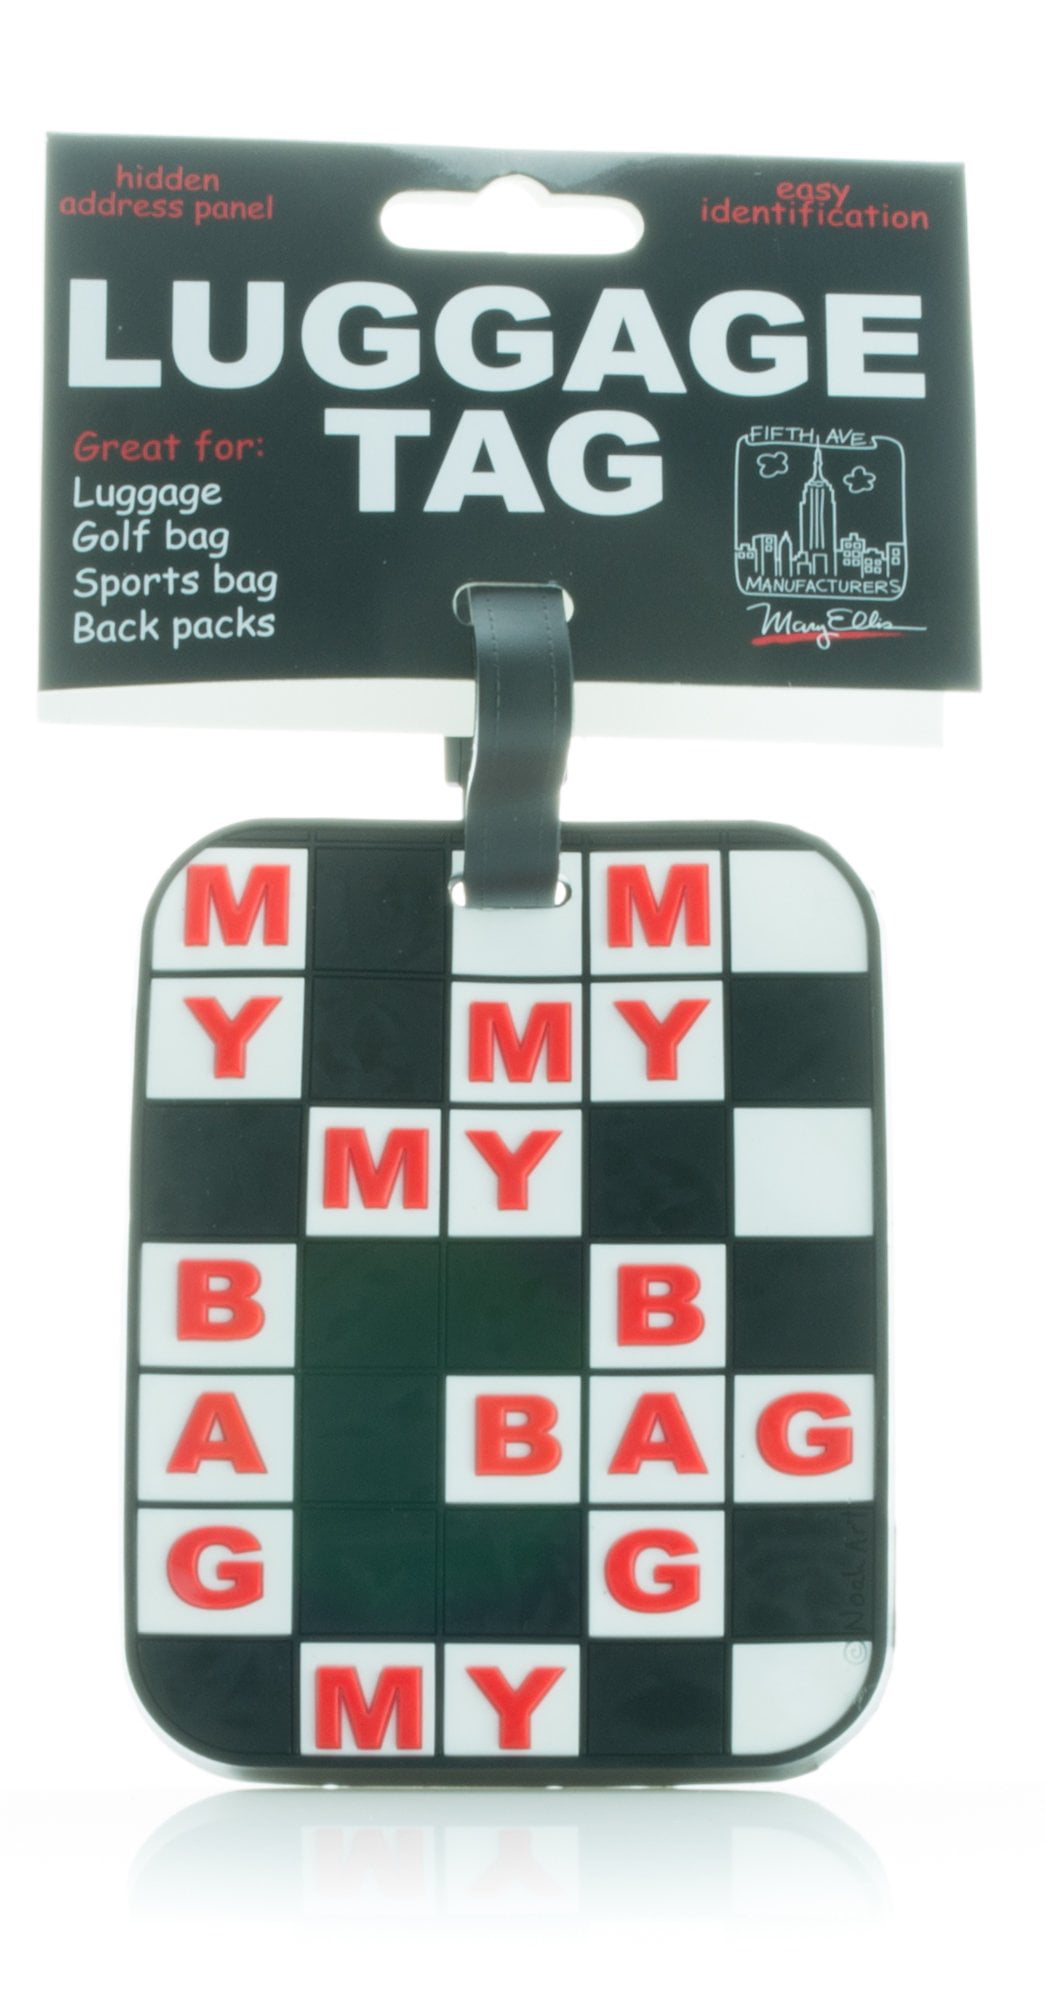 Crossword Puzzle Gym Bag